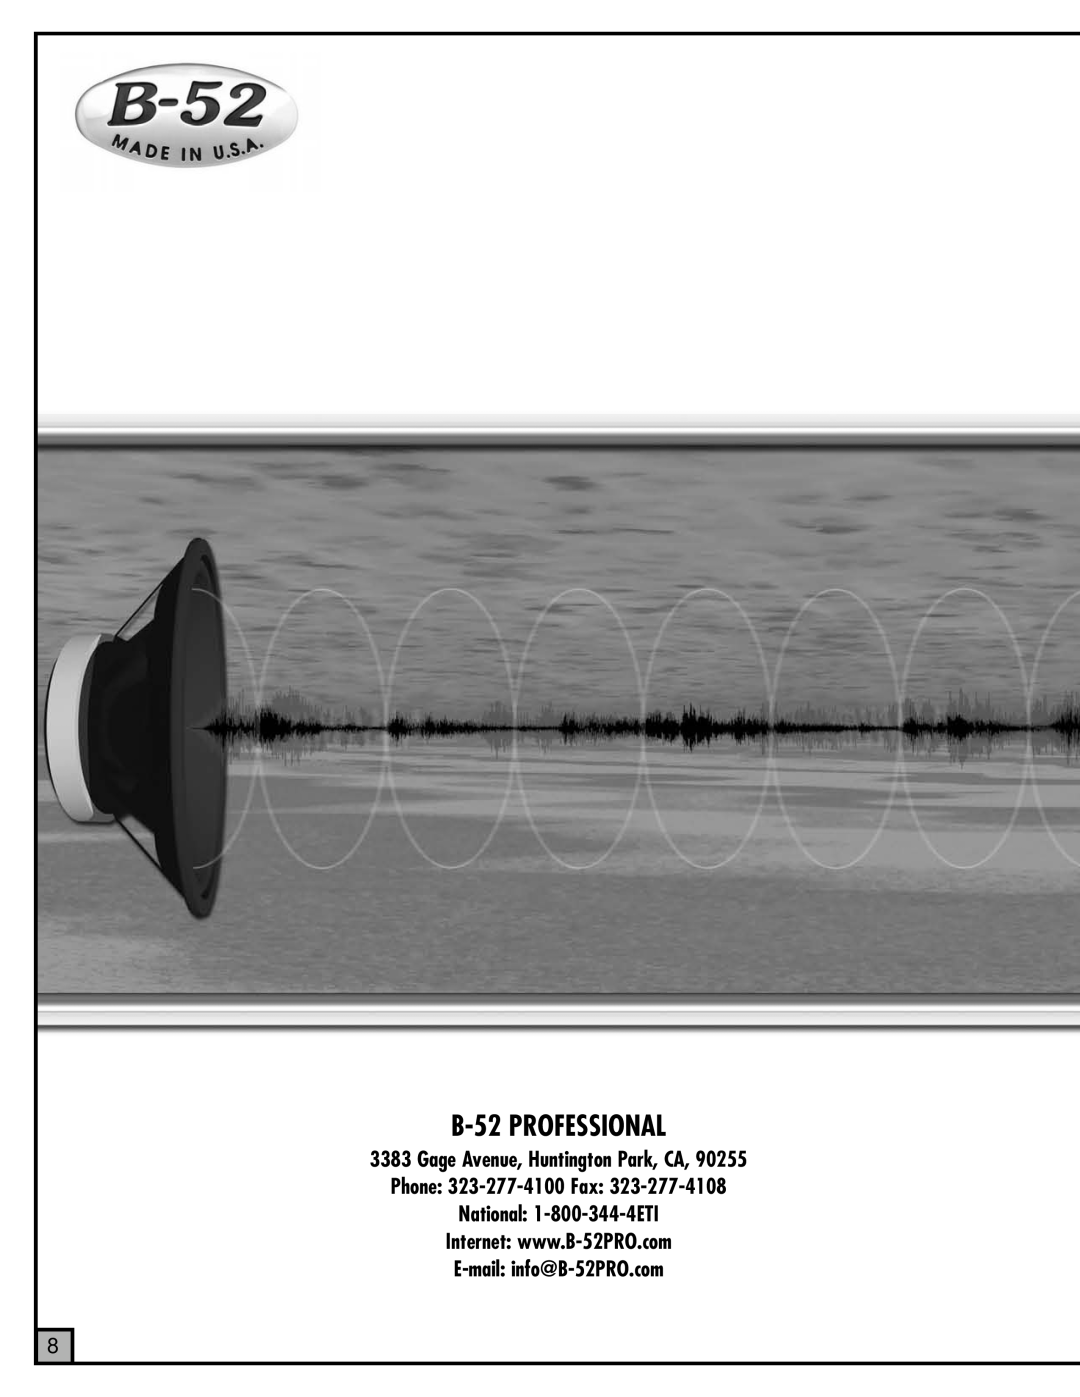 ETI Sound Systems, INC ACT-18X manual B-52PROFESSIONAL, Gage Avenue, Huntington Park, CA 